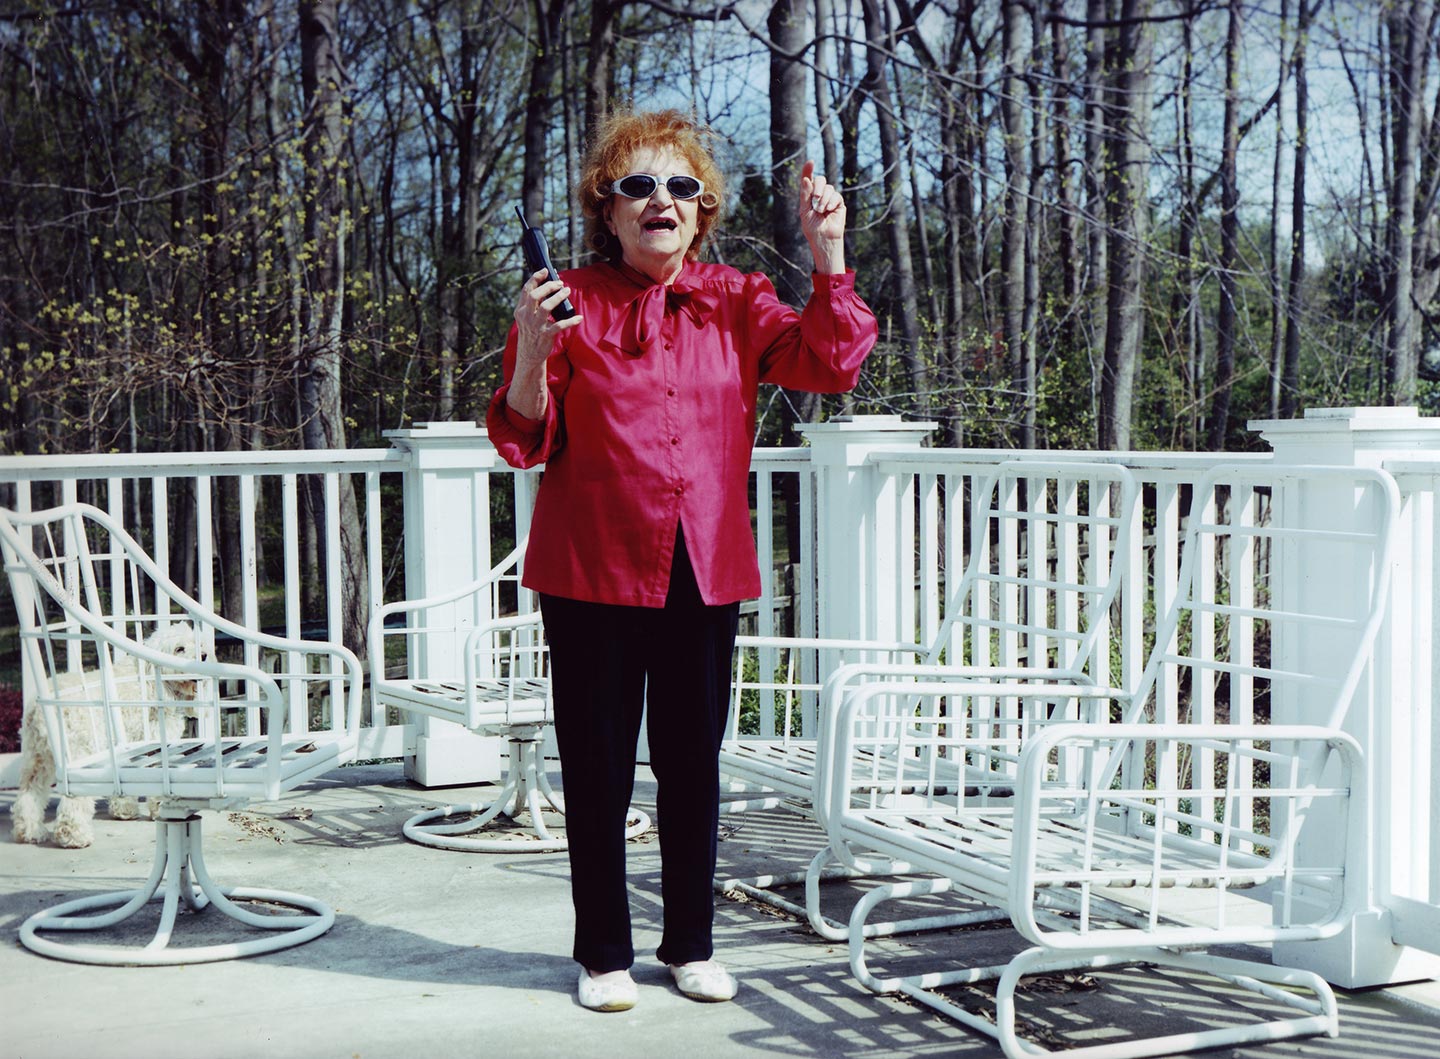 grandma on porch, photograph by jeff fried, denver's best photographer